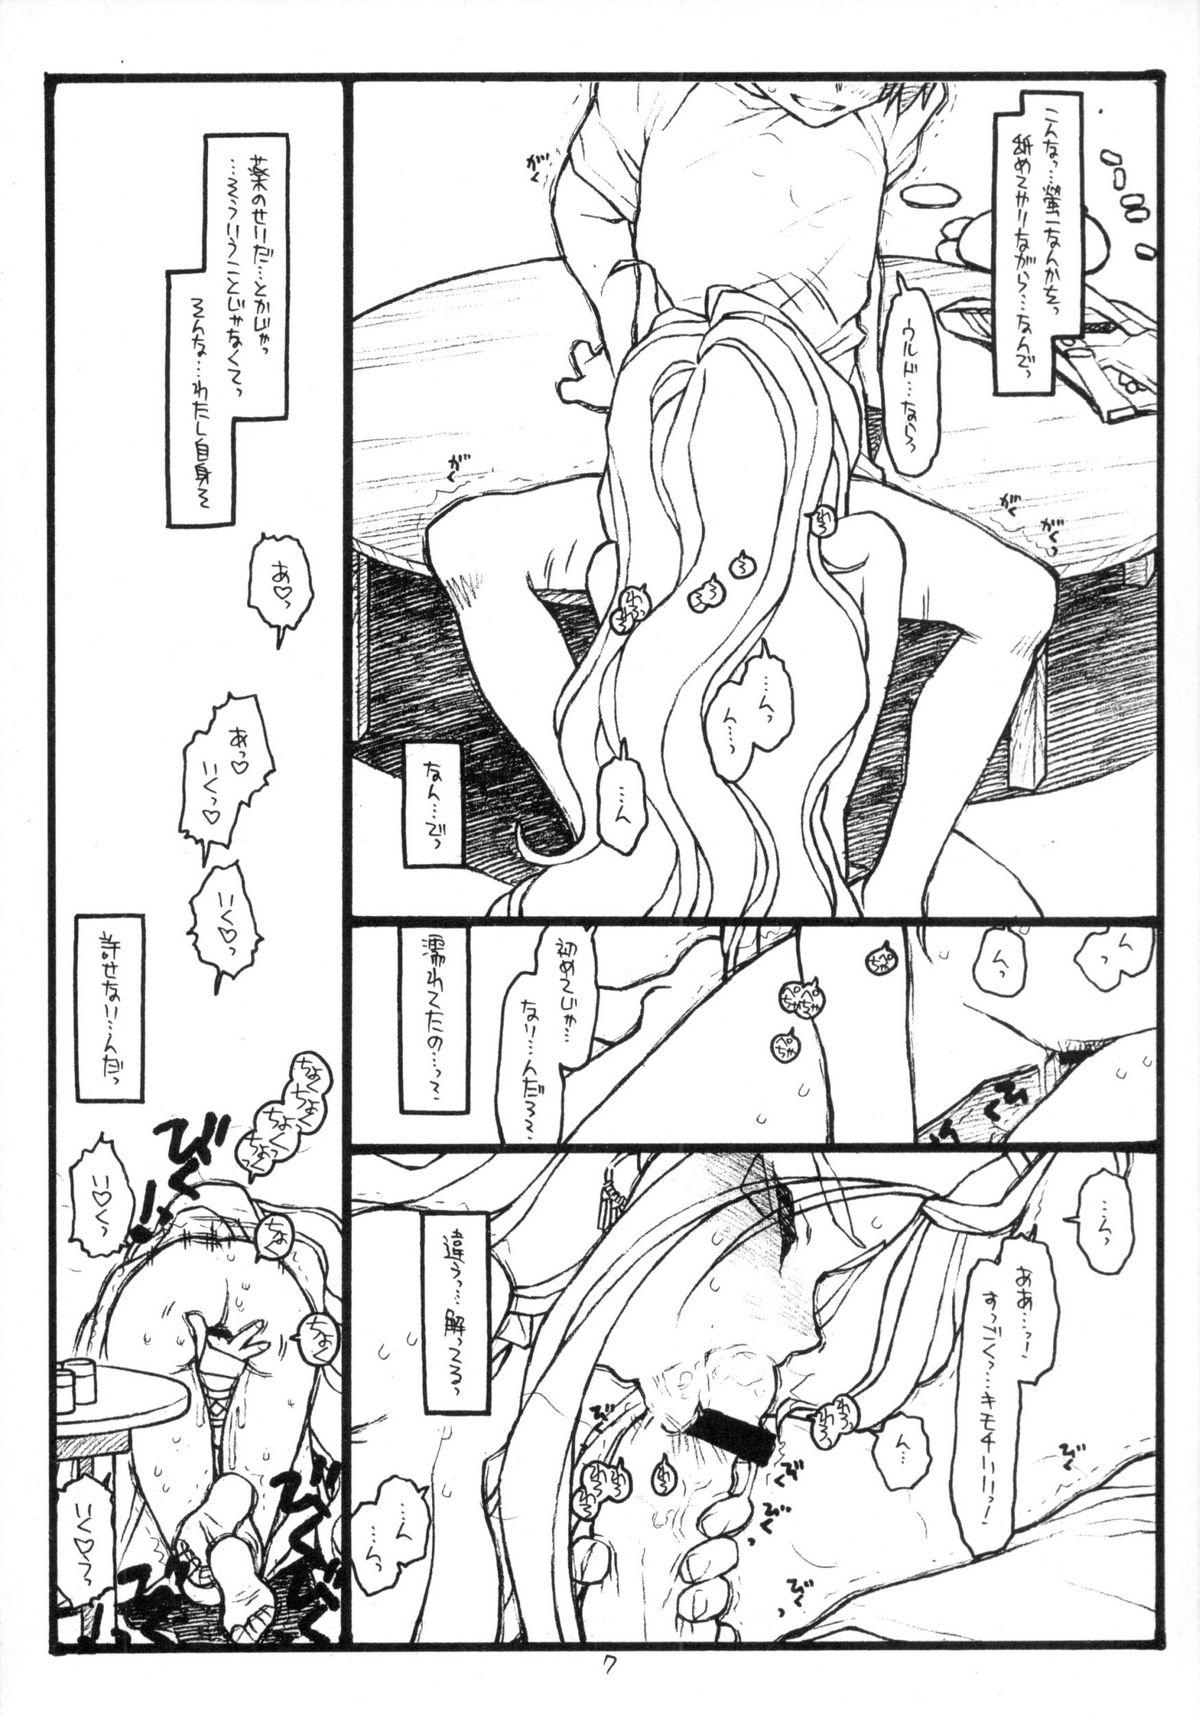 Lesbians Oh My Sadness Episode #6.1 - Ah my goddess Bucetuda - Page 6